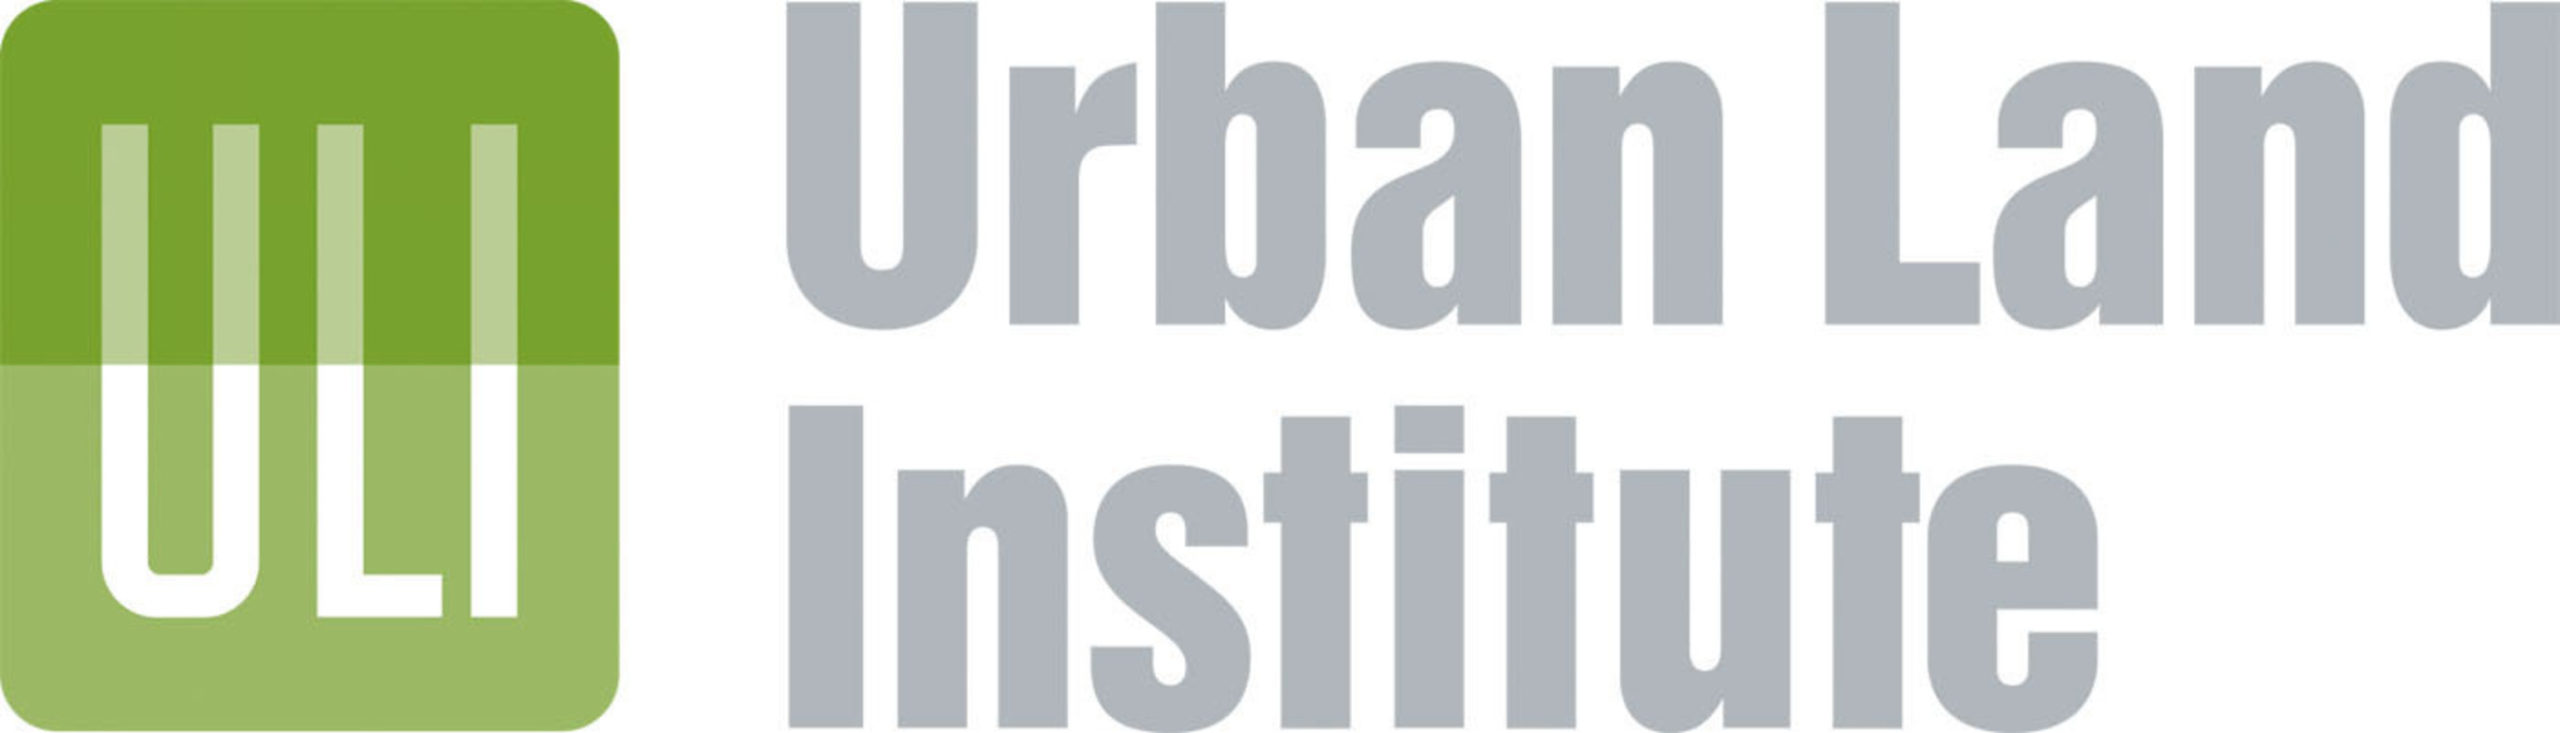 Urban land institute бизнес эмиграция в финляндию